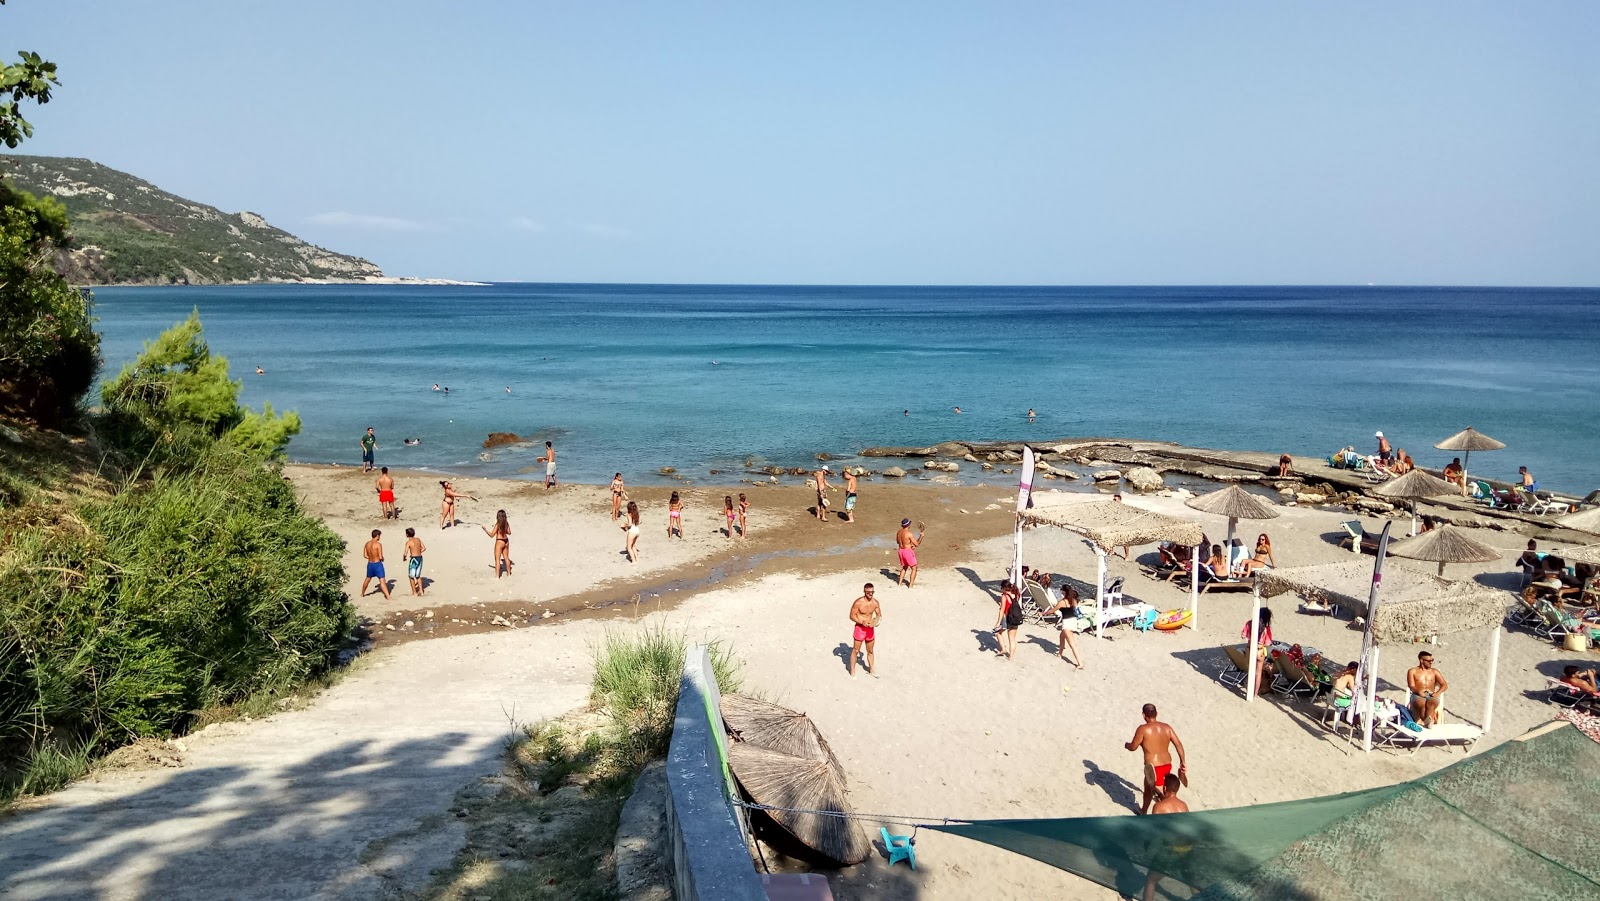 Foto de Soutsini beach com alto nível de limpeza